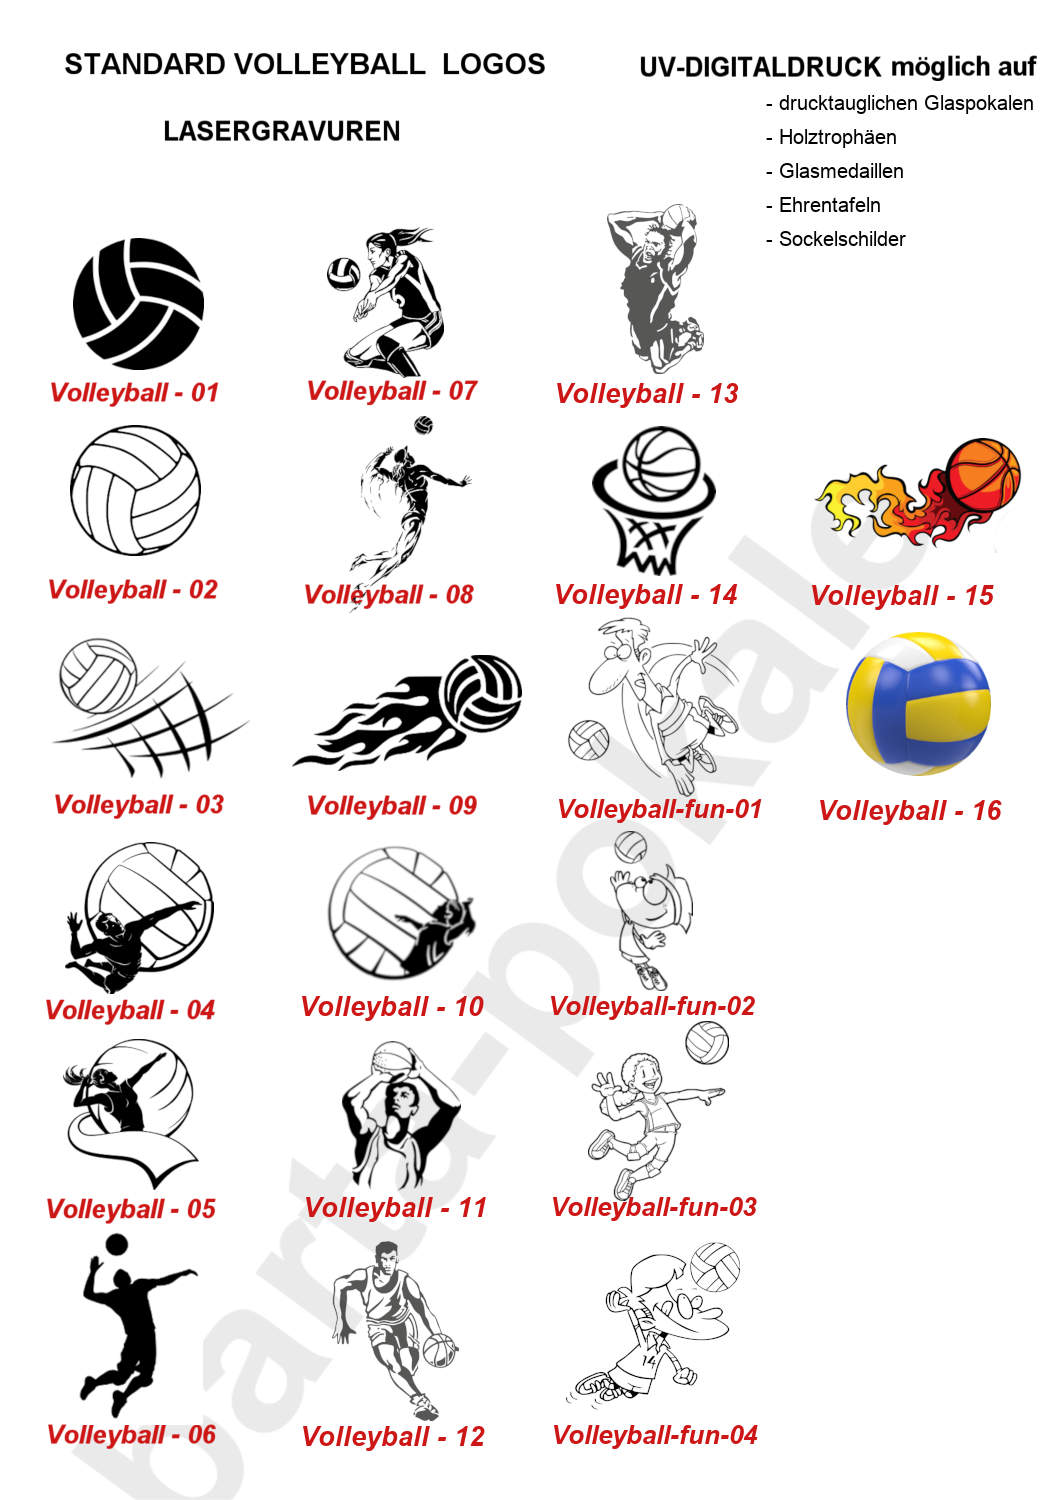 Standard Logos Volleyball